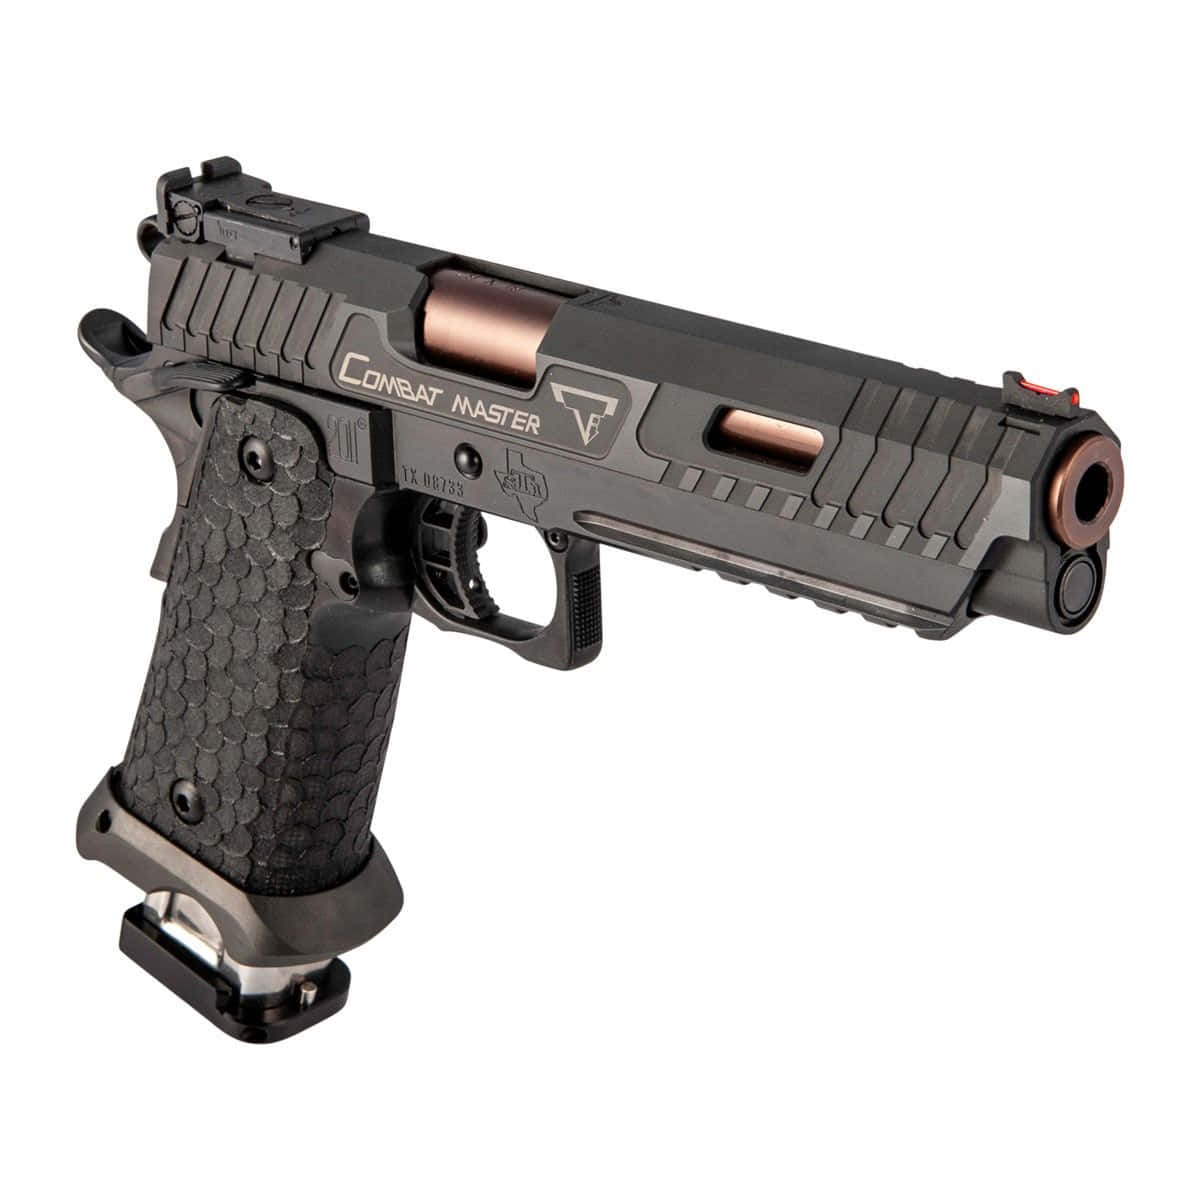 Combat Master Pistol Handgun Picture